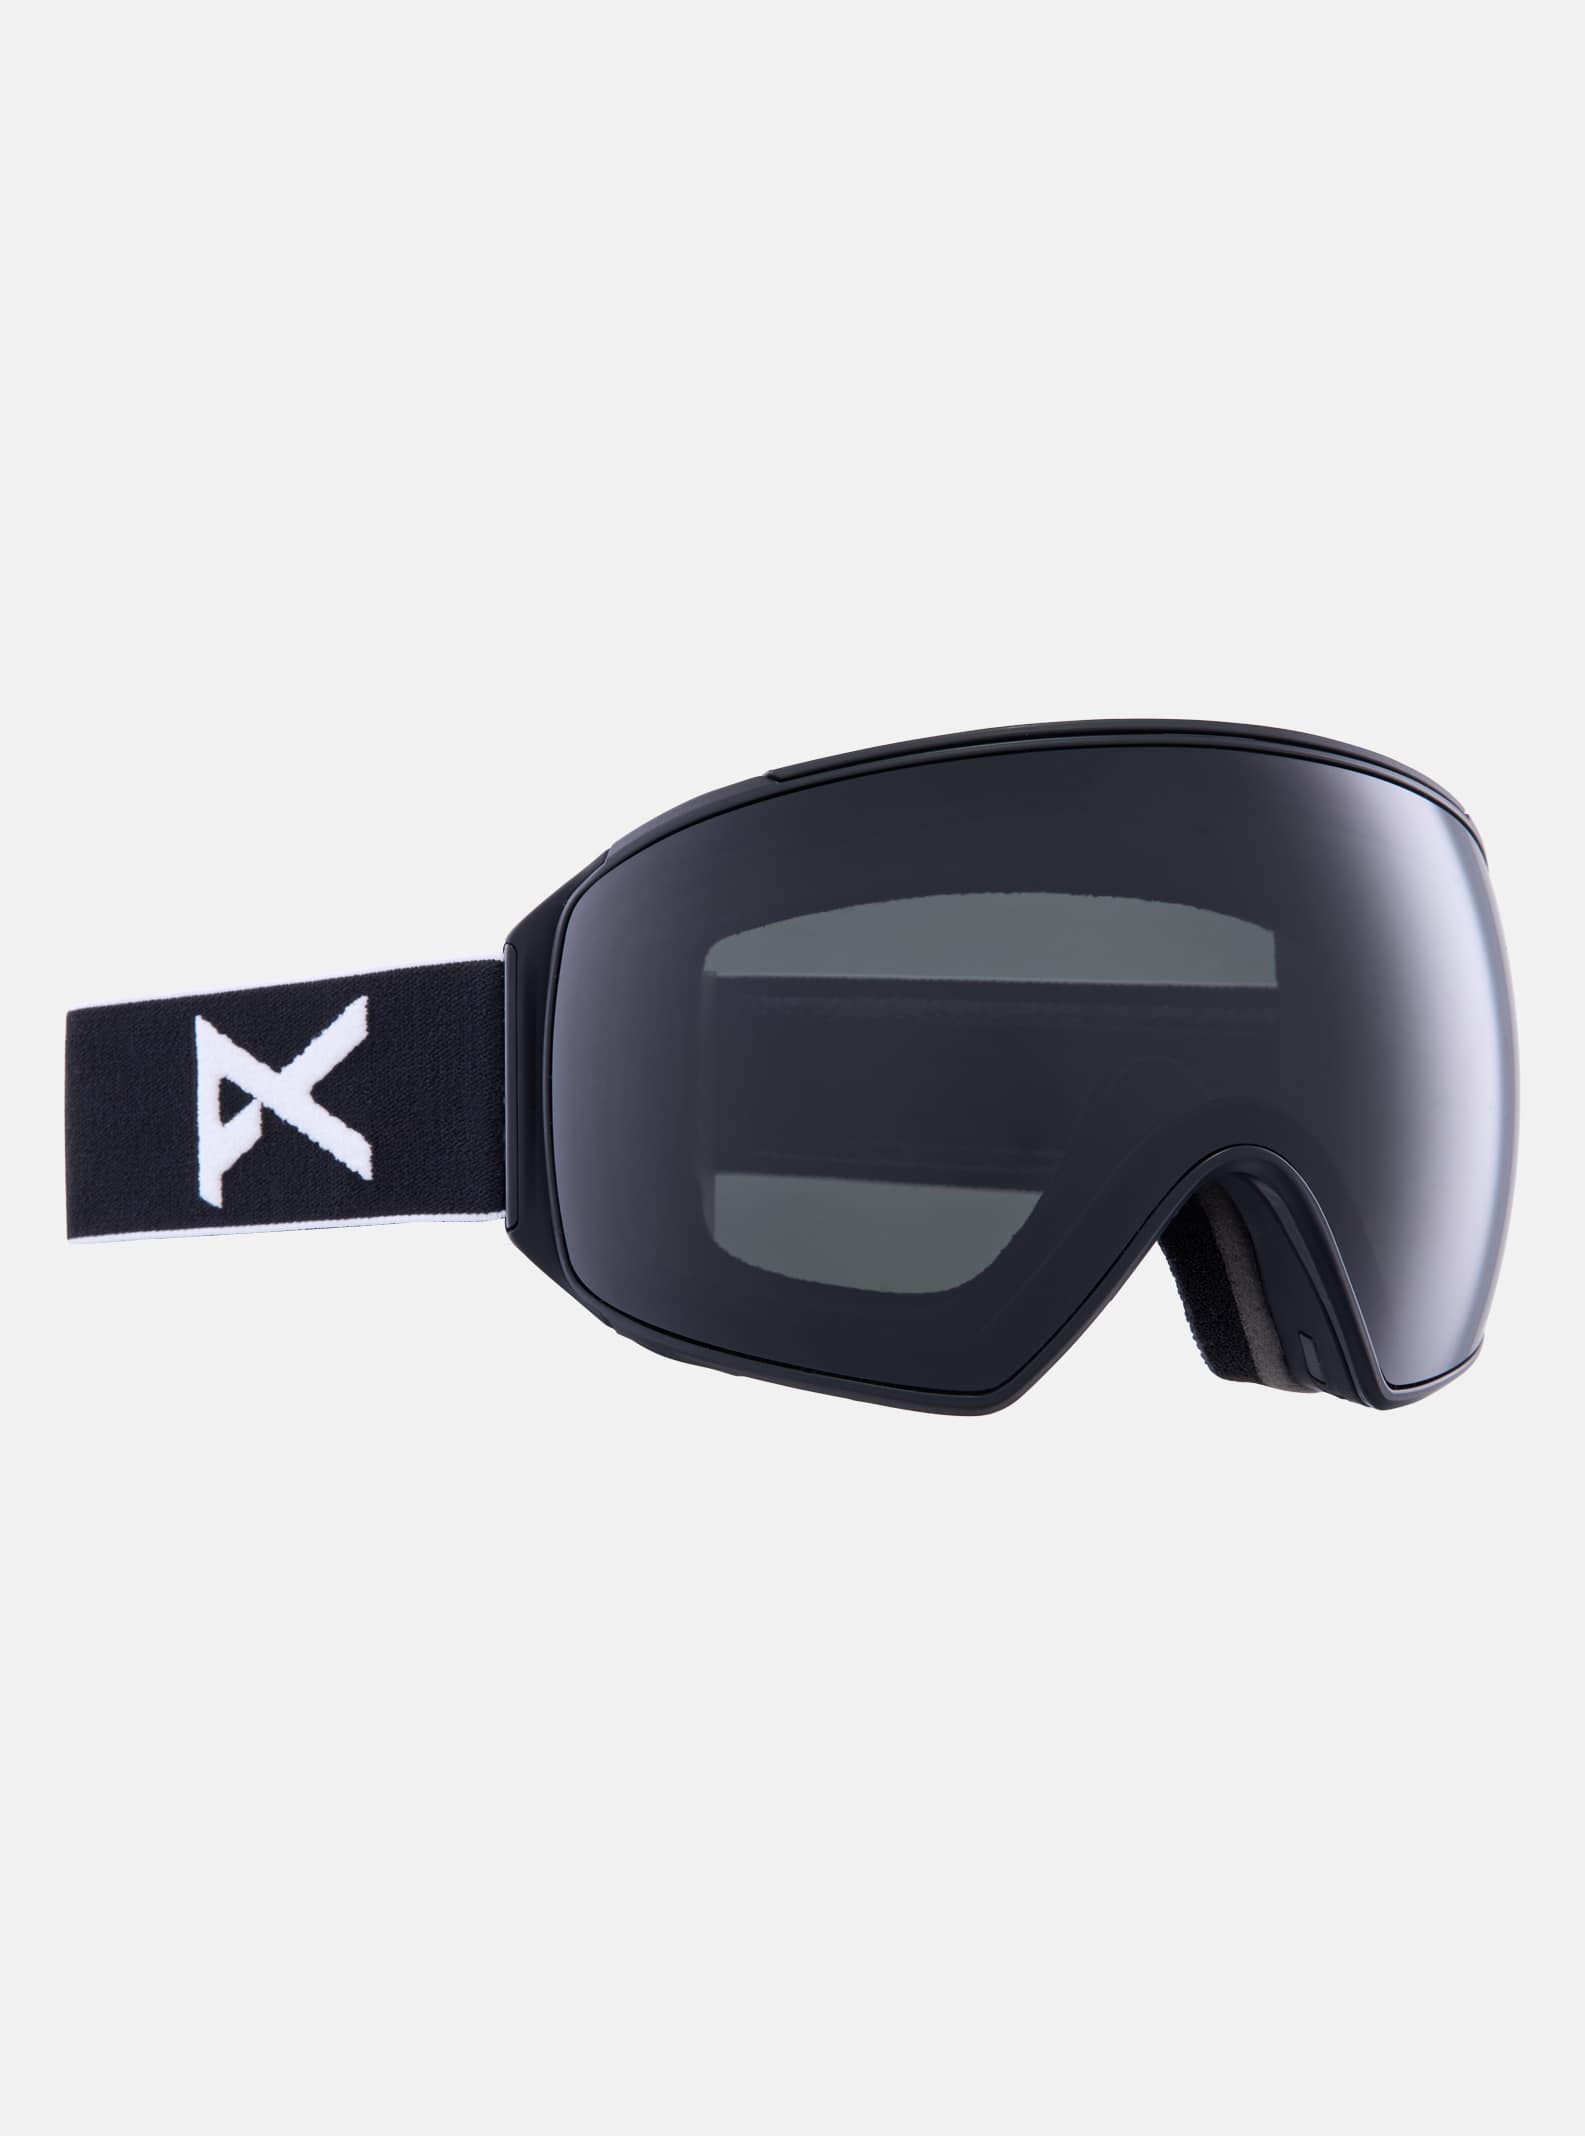 Anon M4 Goggles (Polarized Toric) + Lens + Mask | Anon Optics Winter 2023 GB